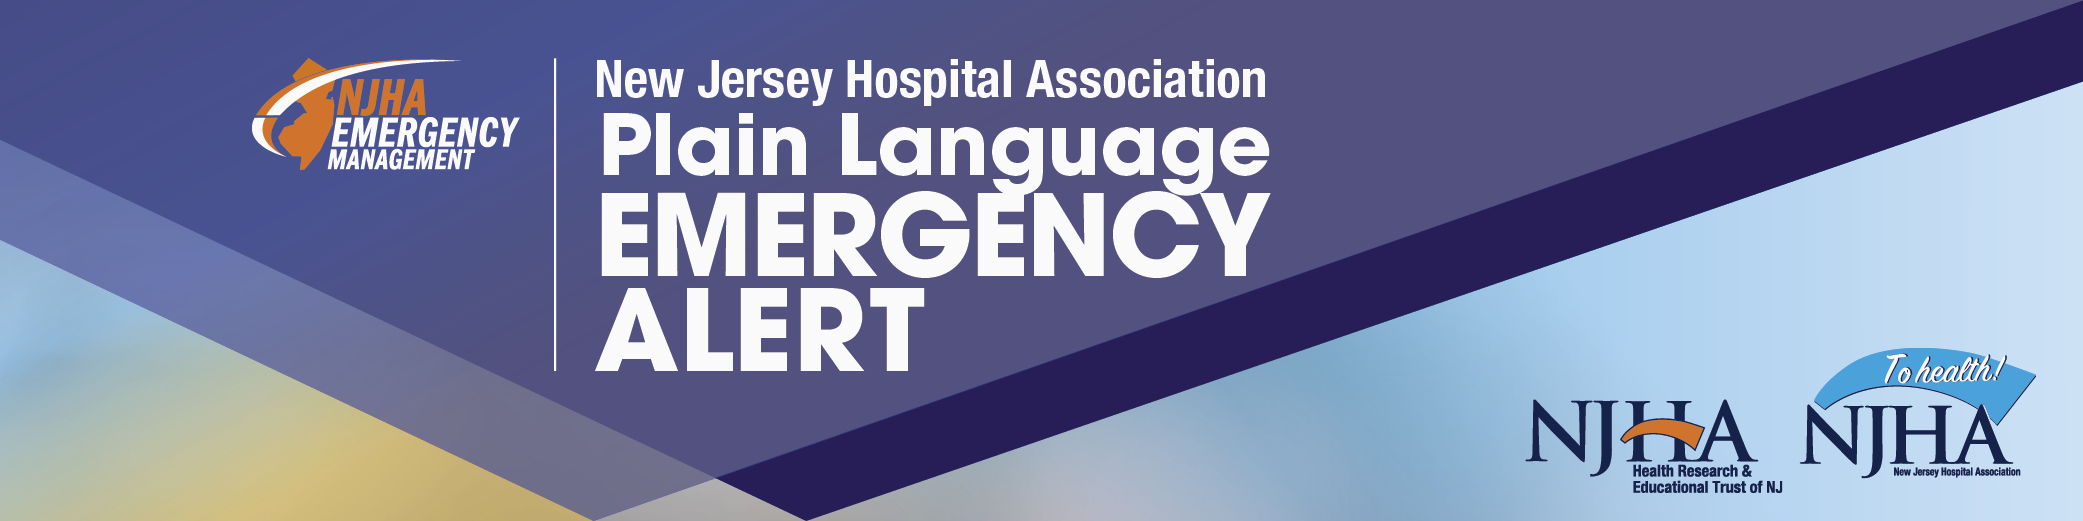 NJHA Plain Language Emergency Alert Banner